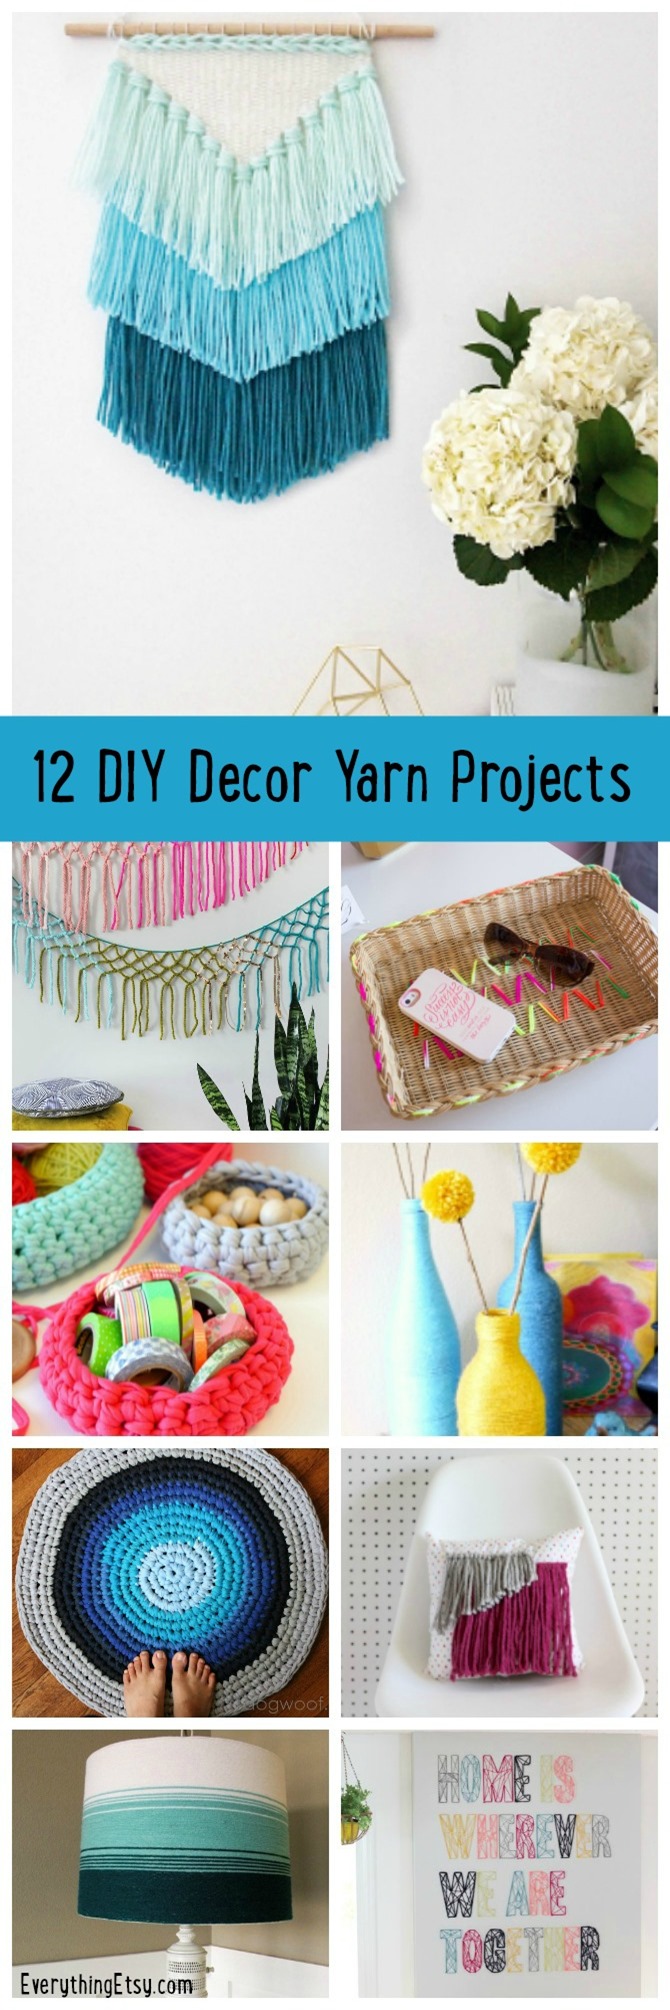 12 DIY Decor Yarn Projects - EverythingEtsy.com